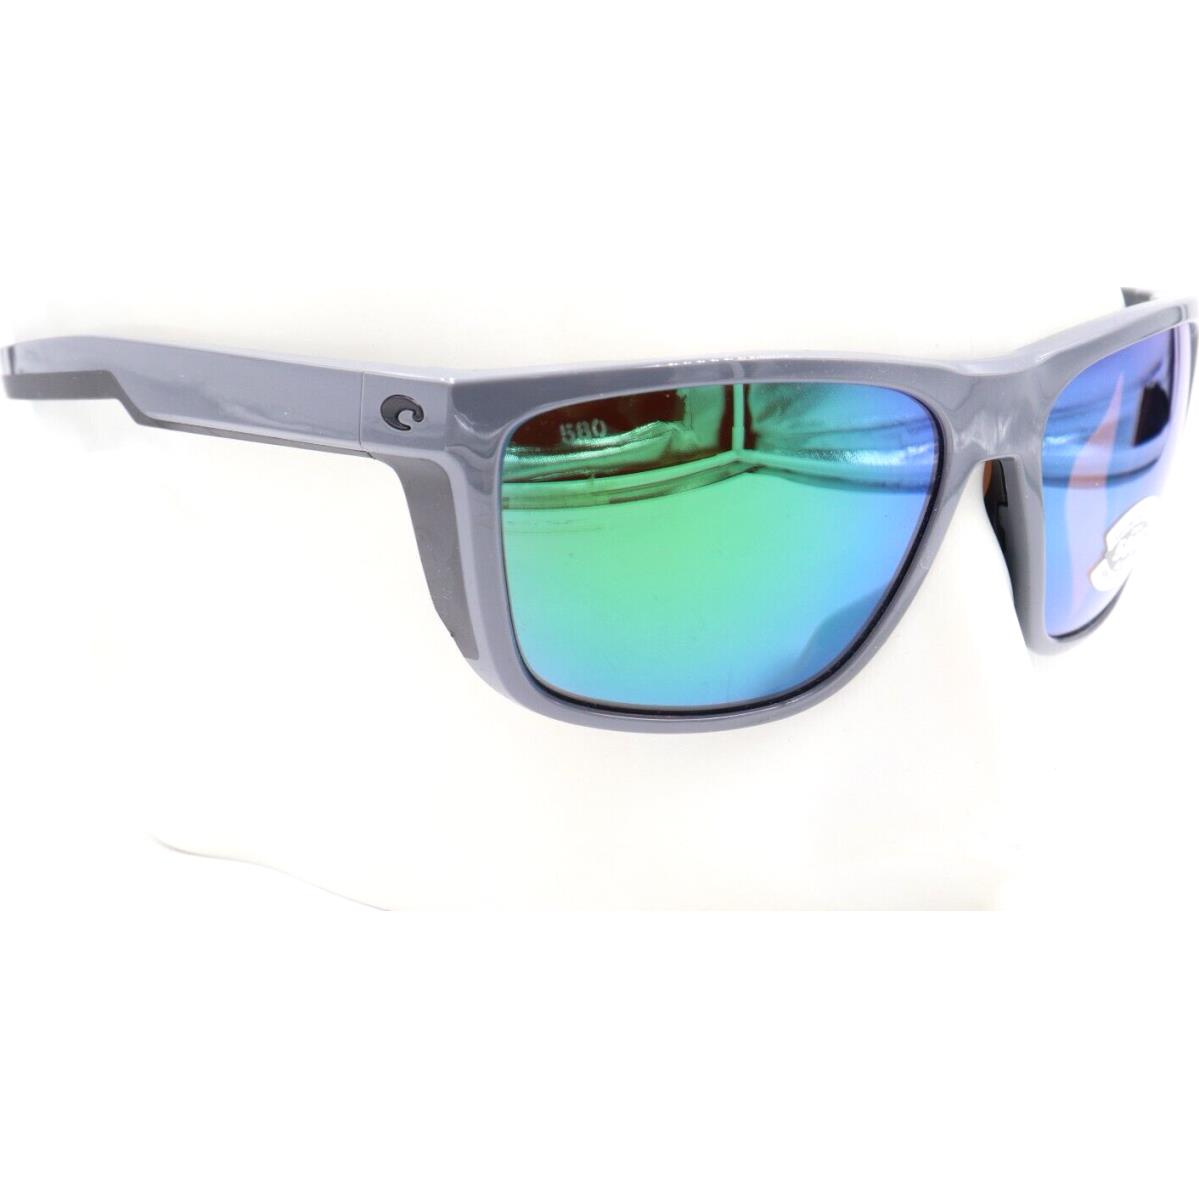 Costa Del Mar sunglasses Fantail - 298 Shiny gray Frame, Green Lens 0